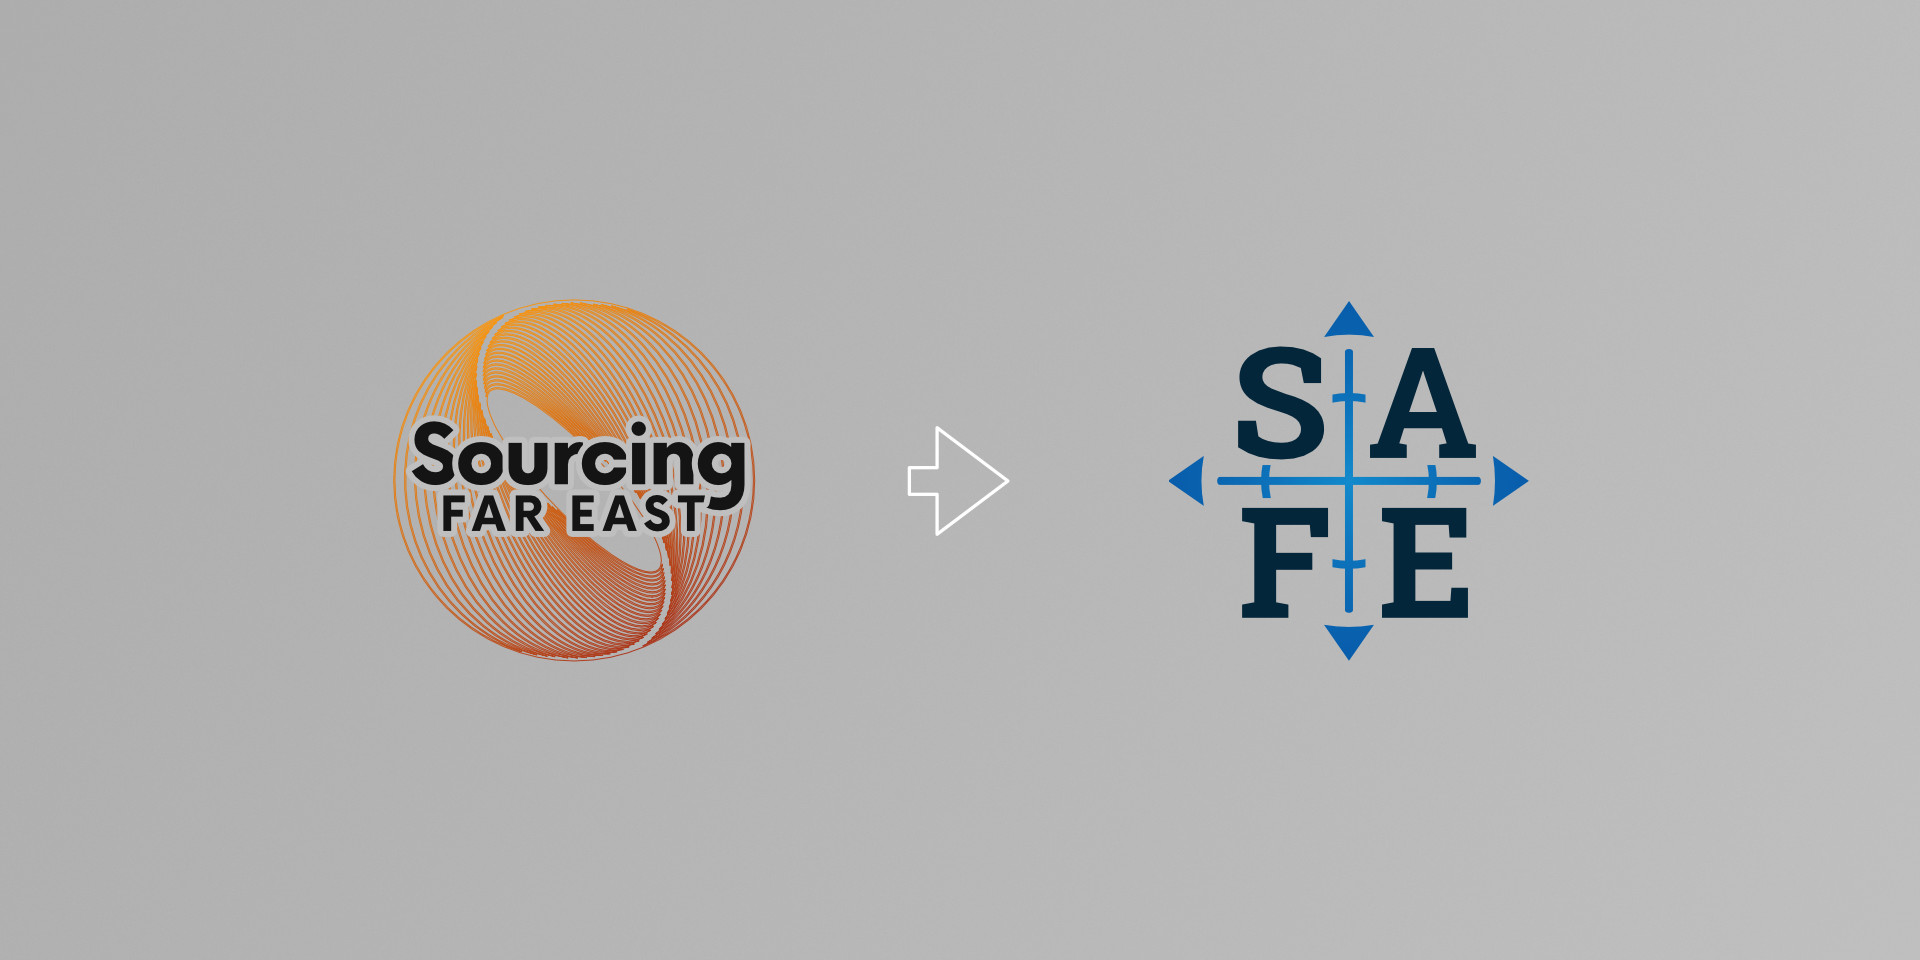 Sourcing far East - SAFE logos